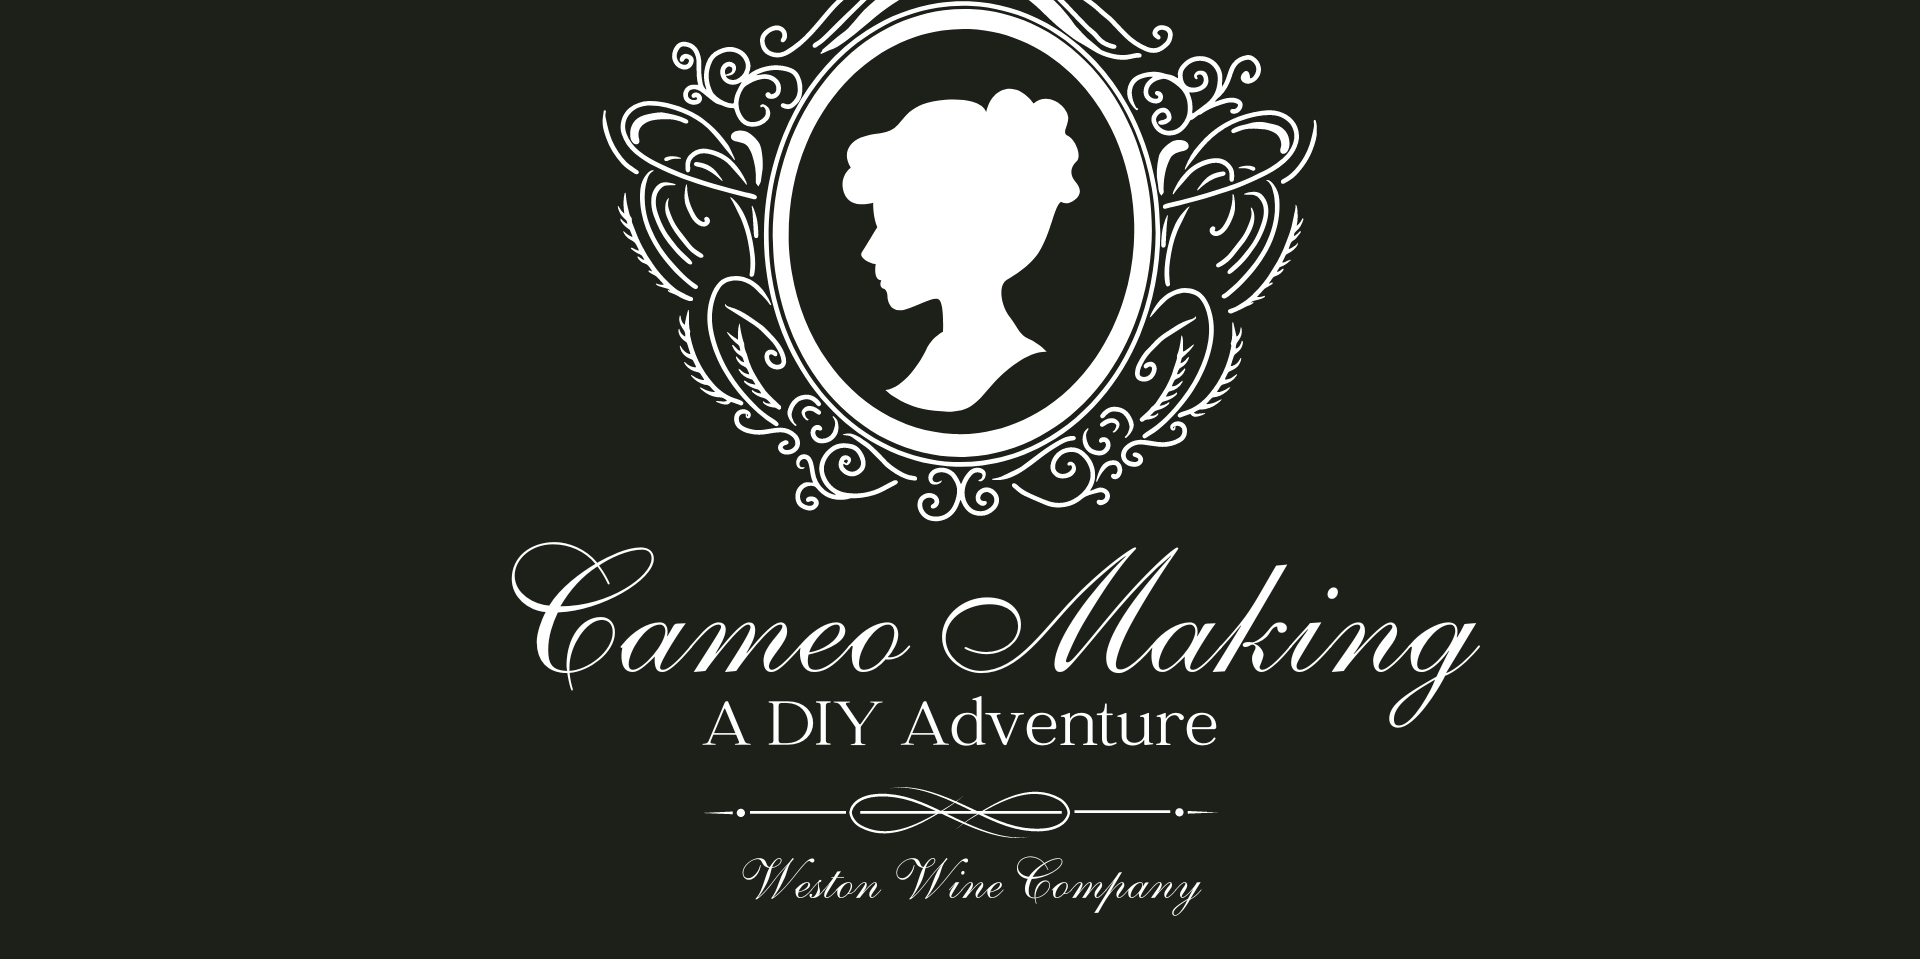 Cameo Making DIY Adventure promotional image